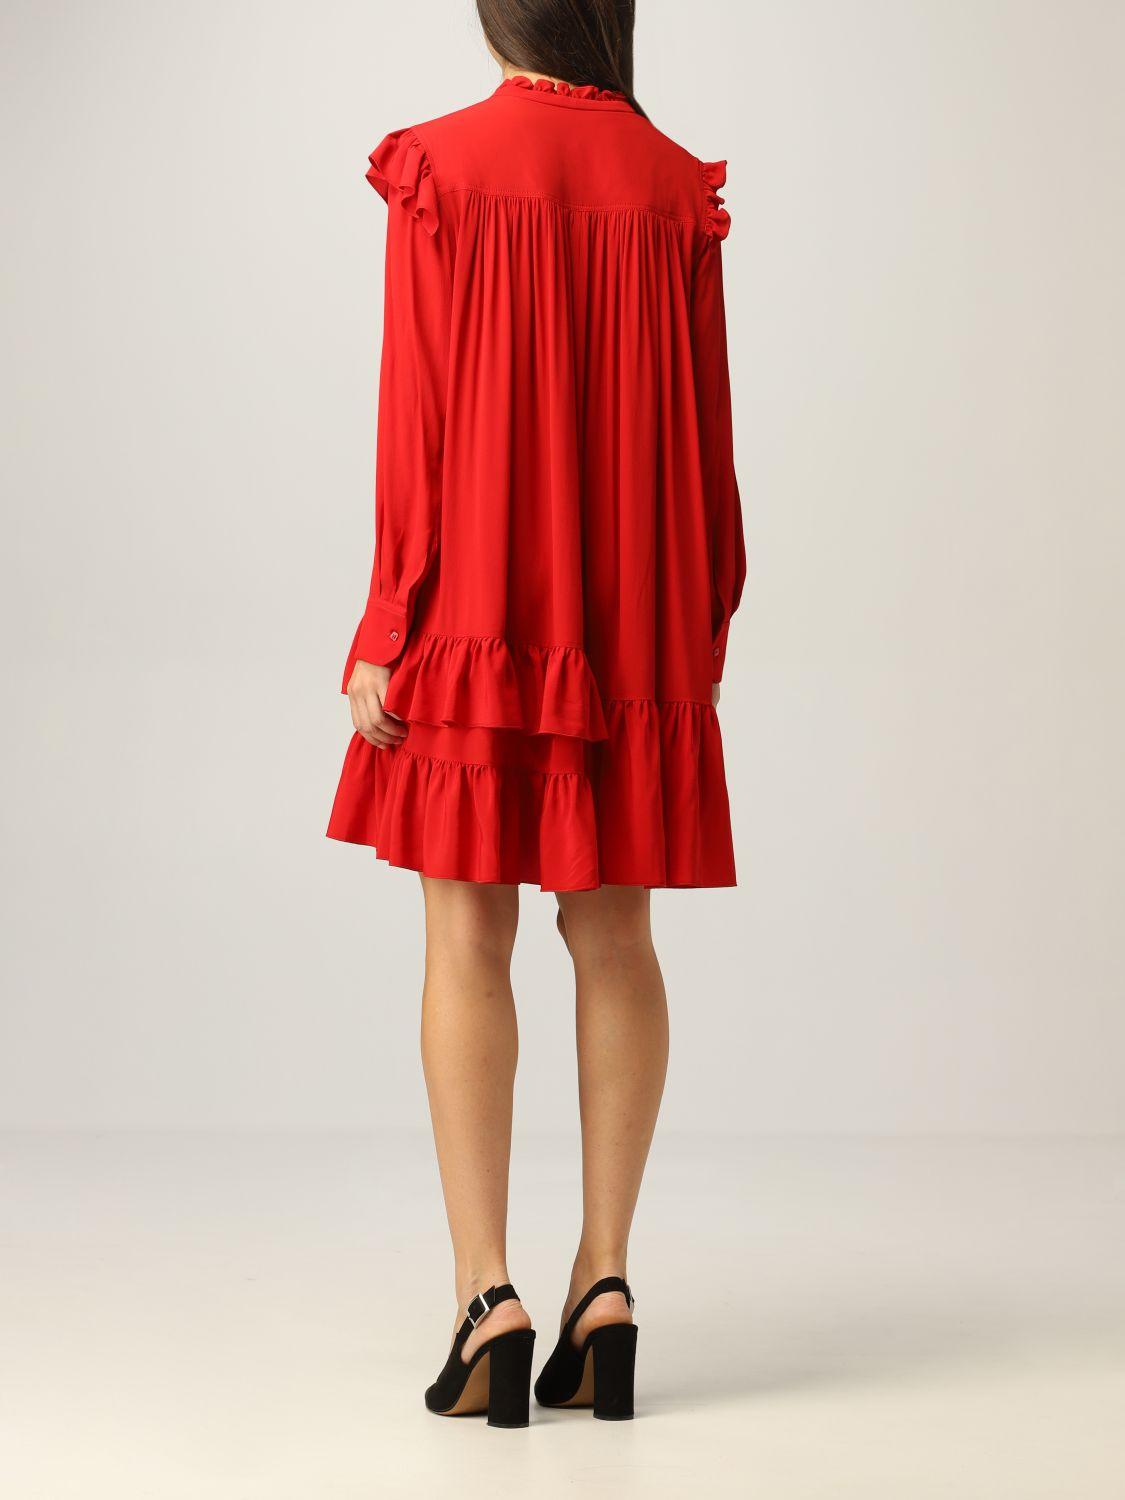 Vivetta Dress in Red - Lyst